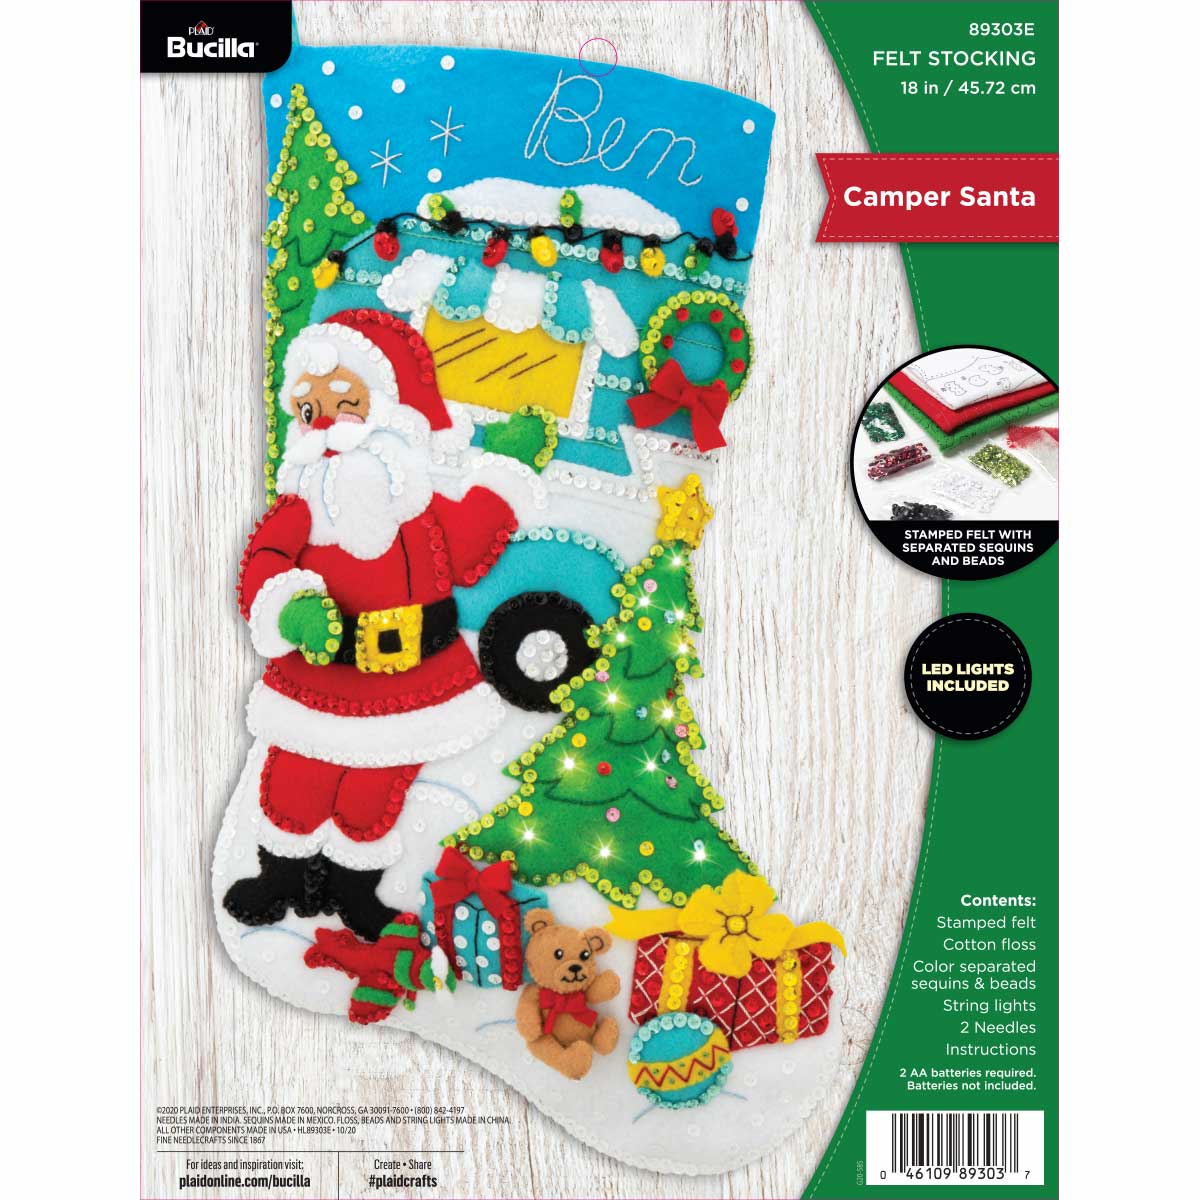 Bucilla ® Seasonal - Felt - Stocking Kits - Camper Santa with String Lights - 89303E